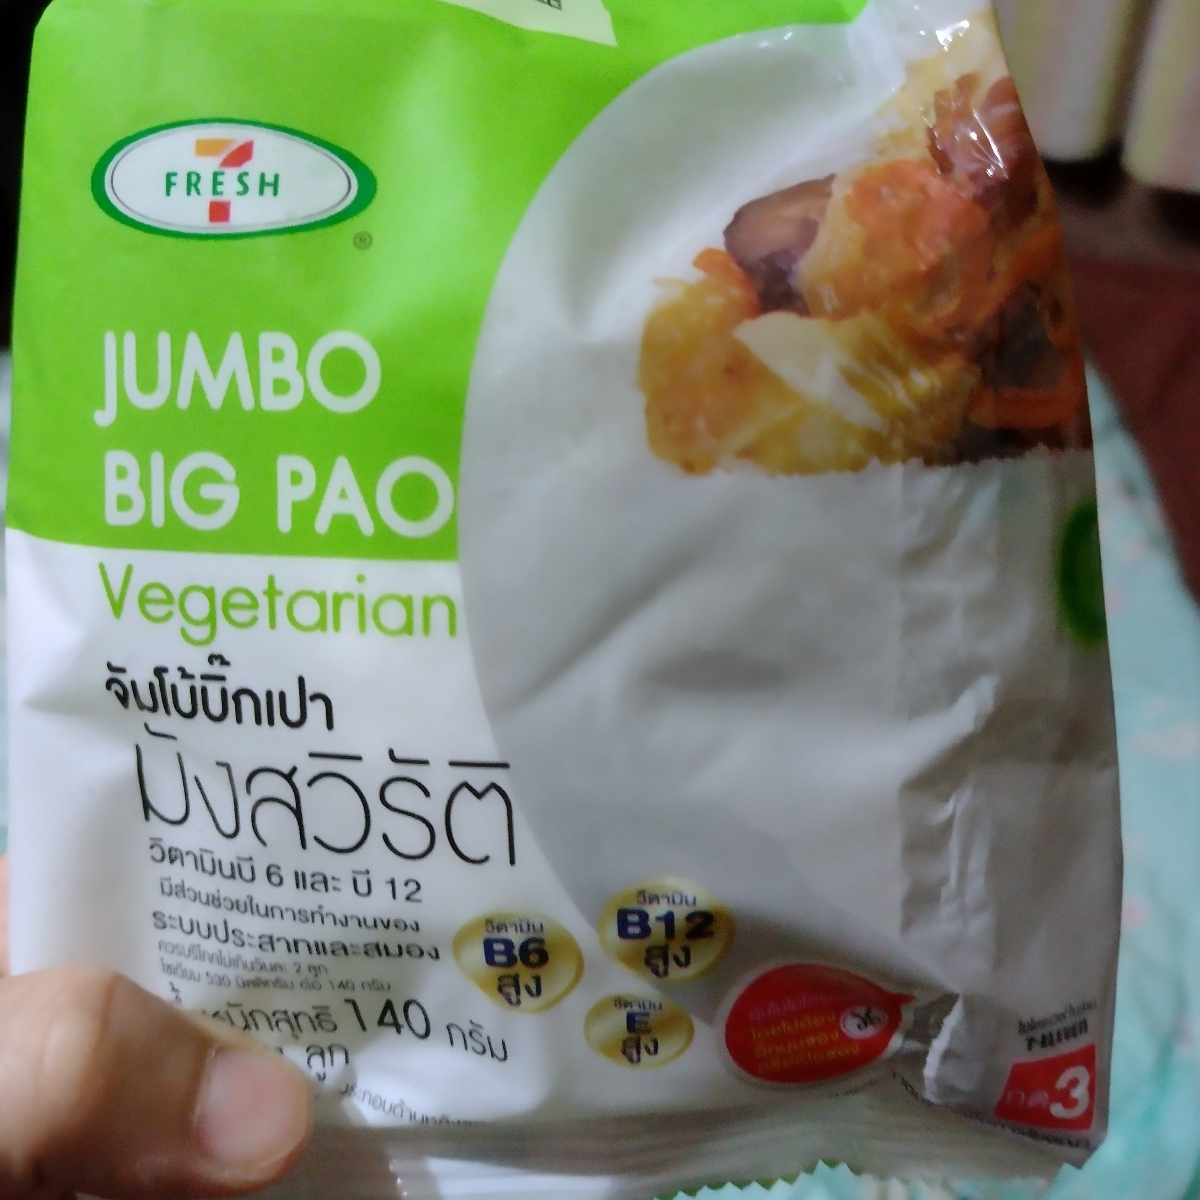 7-Eleven Jumbo Big Pao Vegetarian Review | abillion